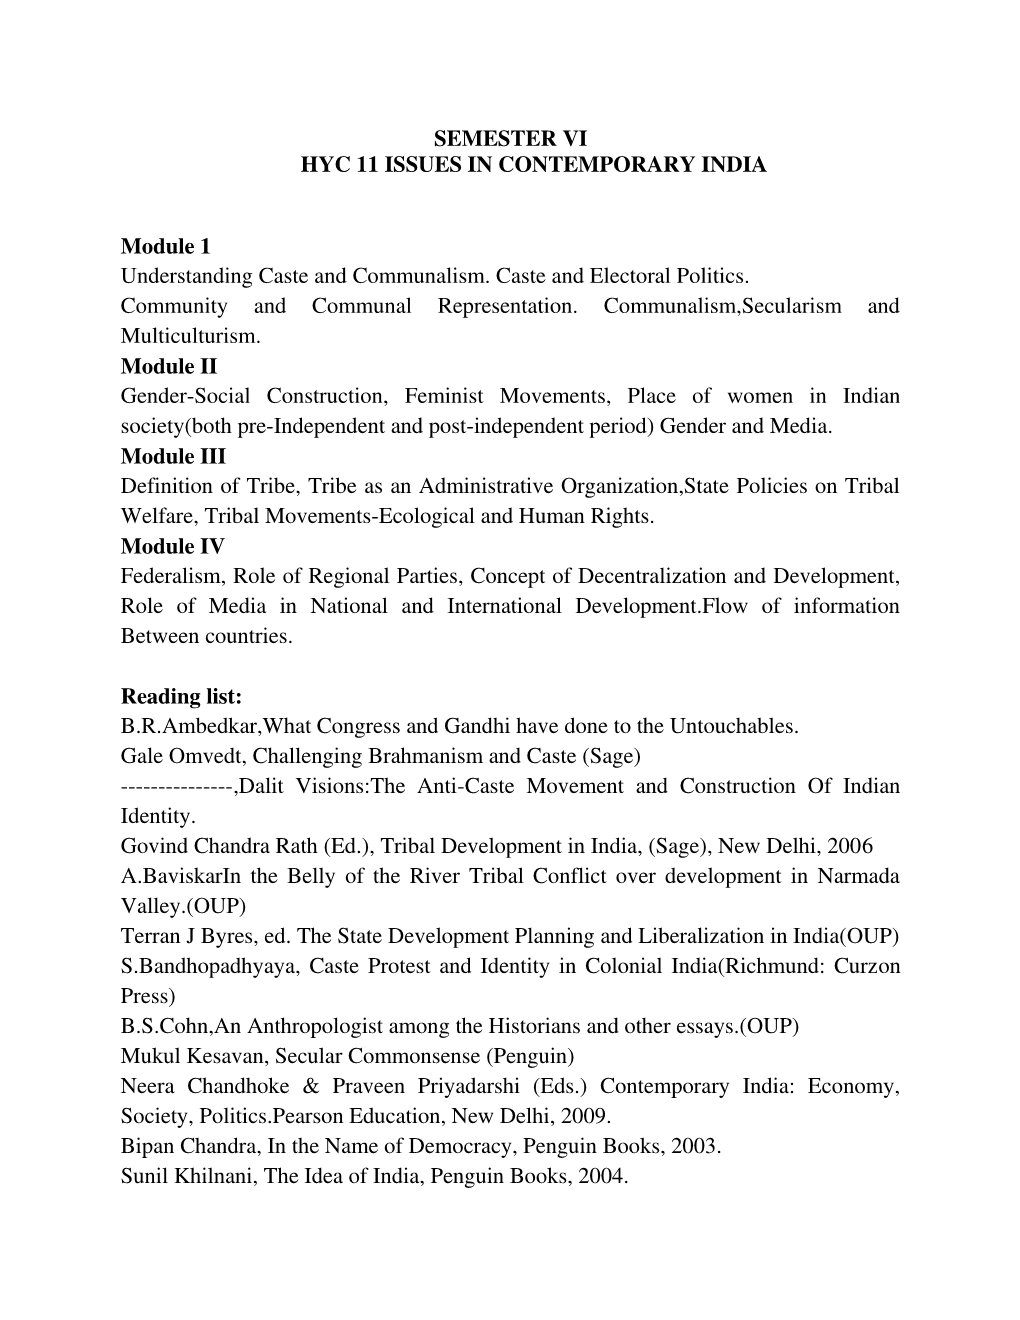 SEMESTER VI HYC 11 ISSUES in CONTEMPORARY INDIA Module 1